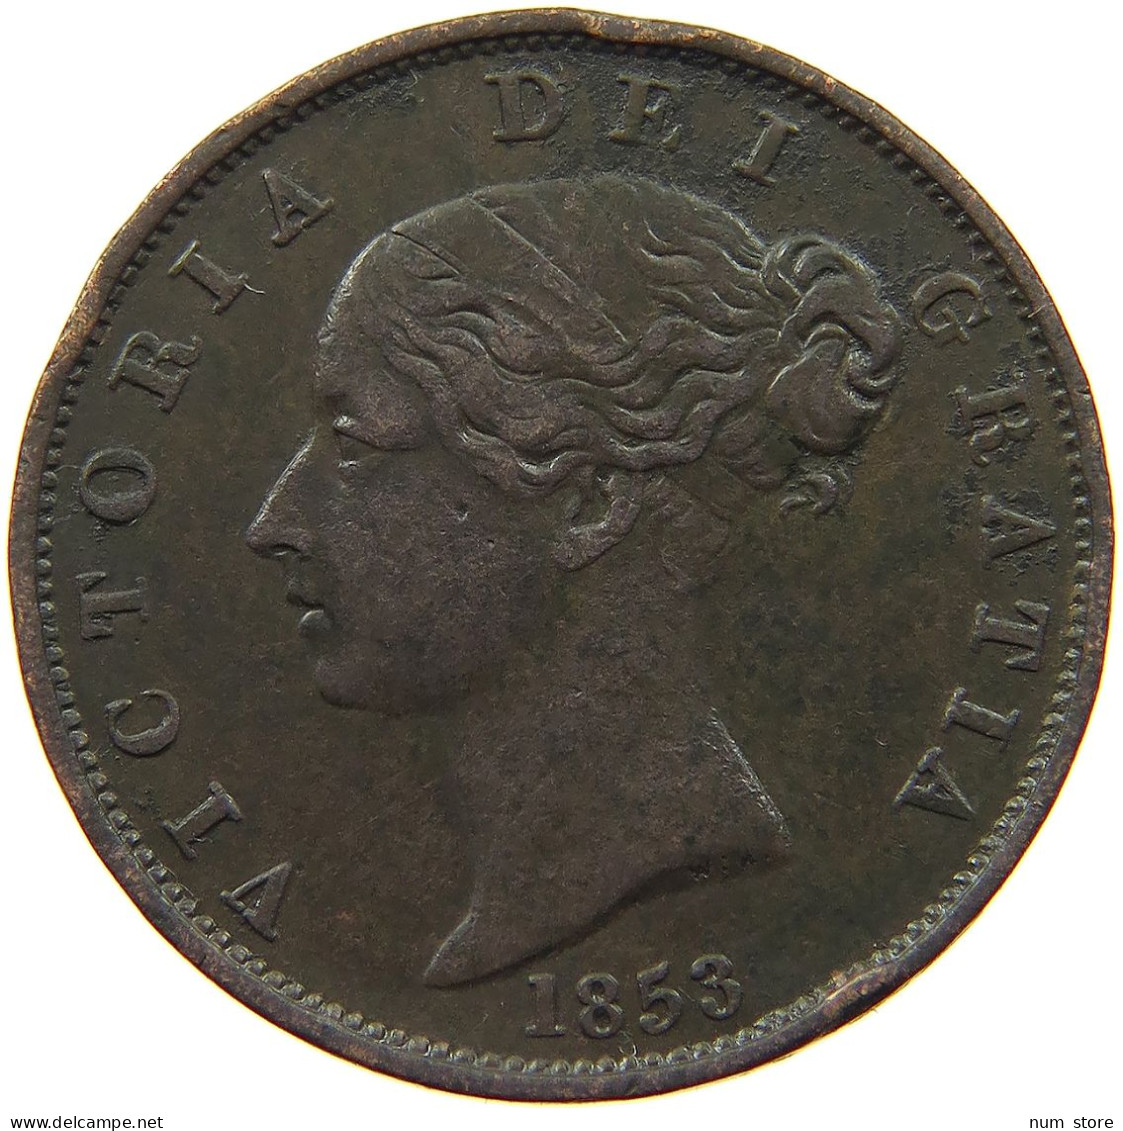 GREAT BRITAIN HALFPENNY 1853 Victoria 1837-1901 #a008 0133 - C. 1/2 Penny